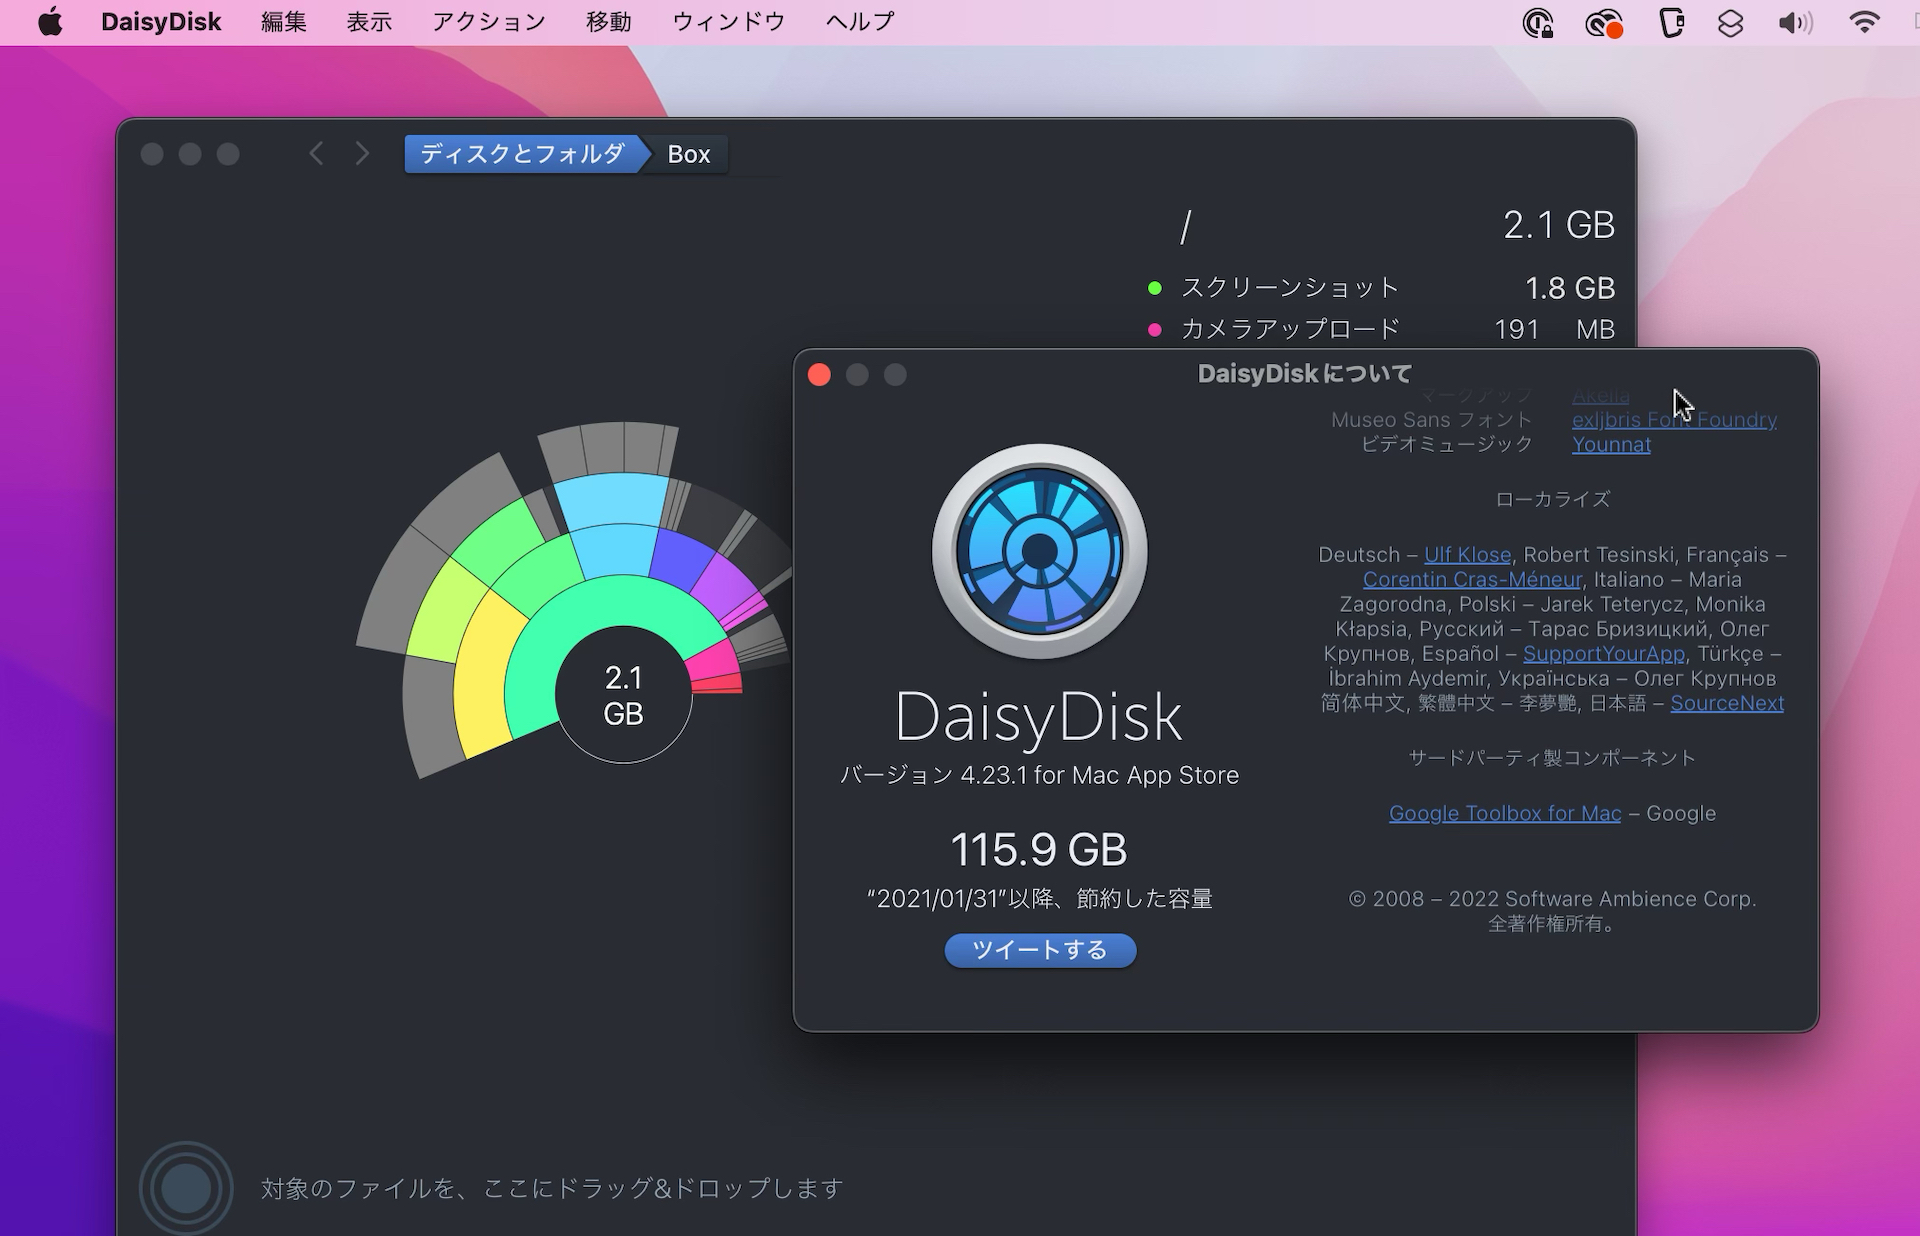 DaisyDisk 4.23